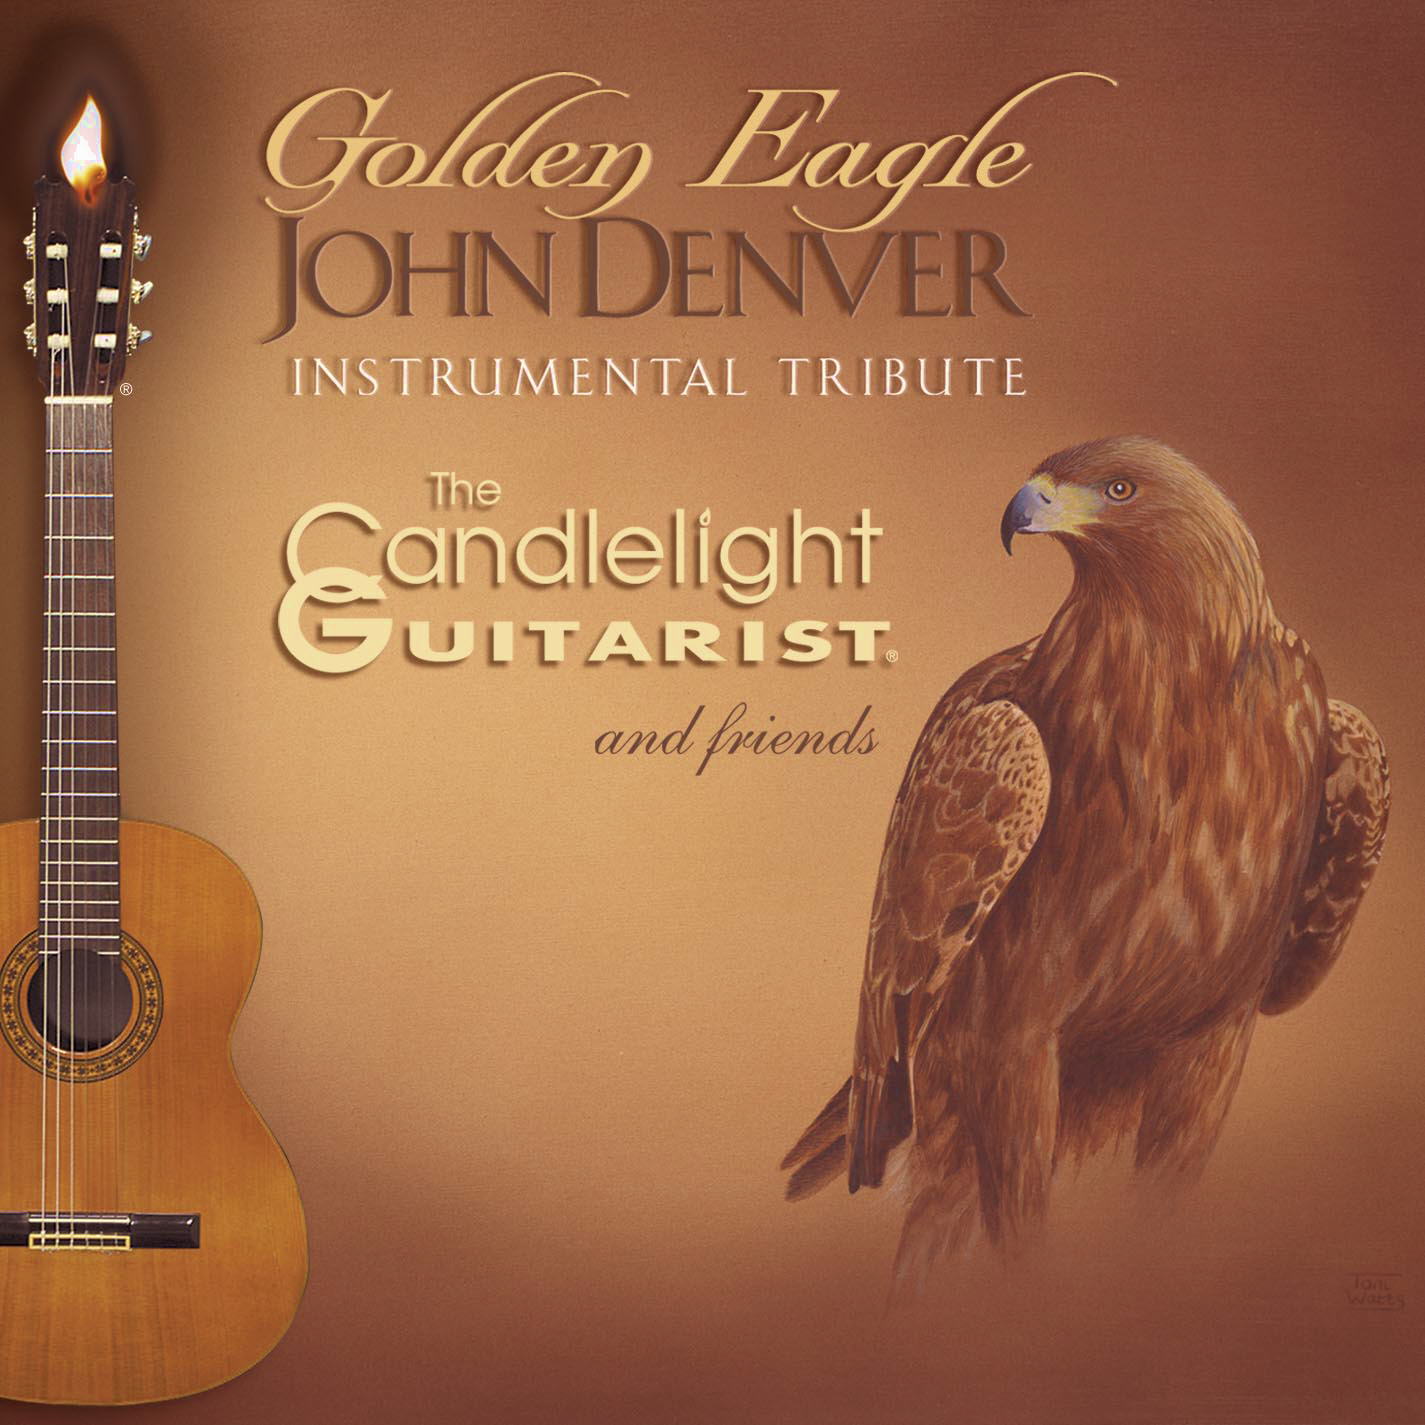 Golden Eagle: JOHN DENVER Instrumental Tribute by The Candlelight Guitarist ® -CLICK TO ORDER CD